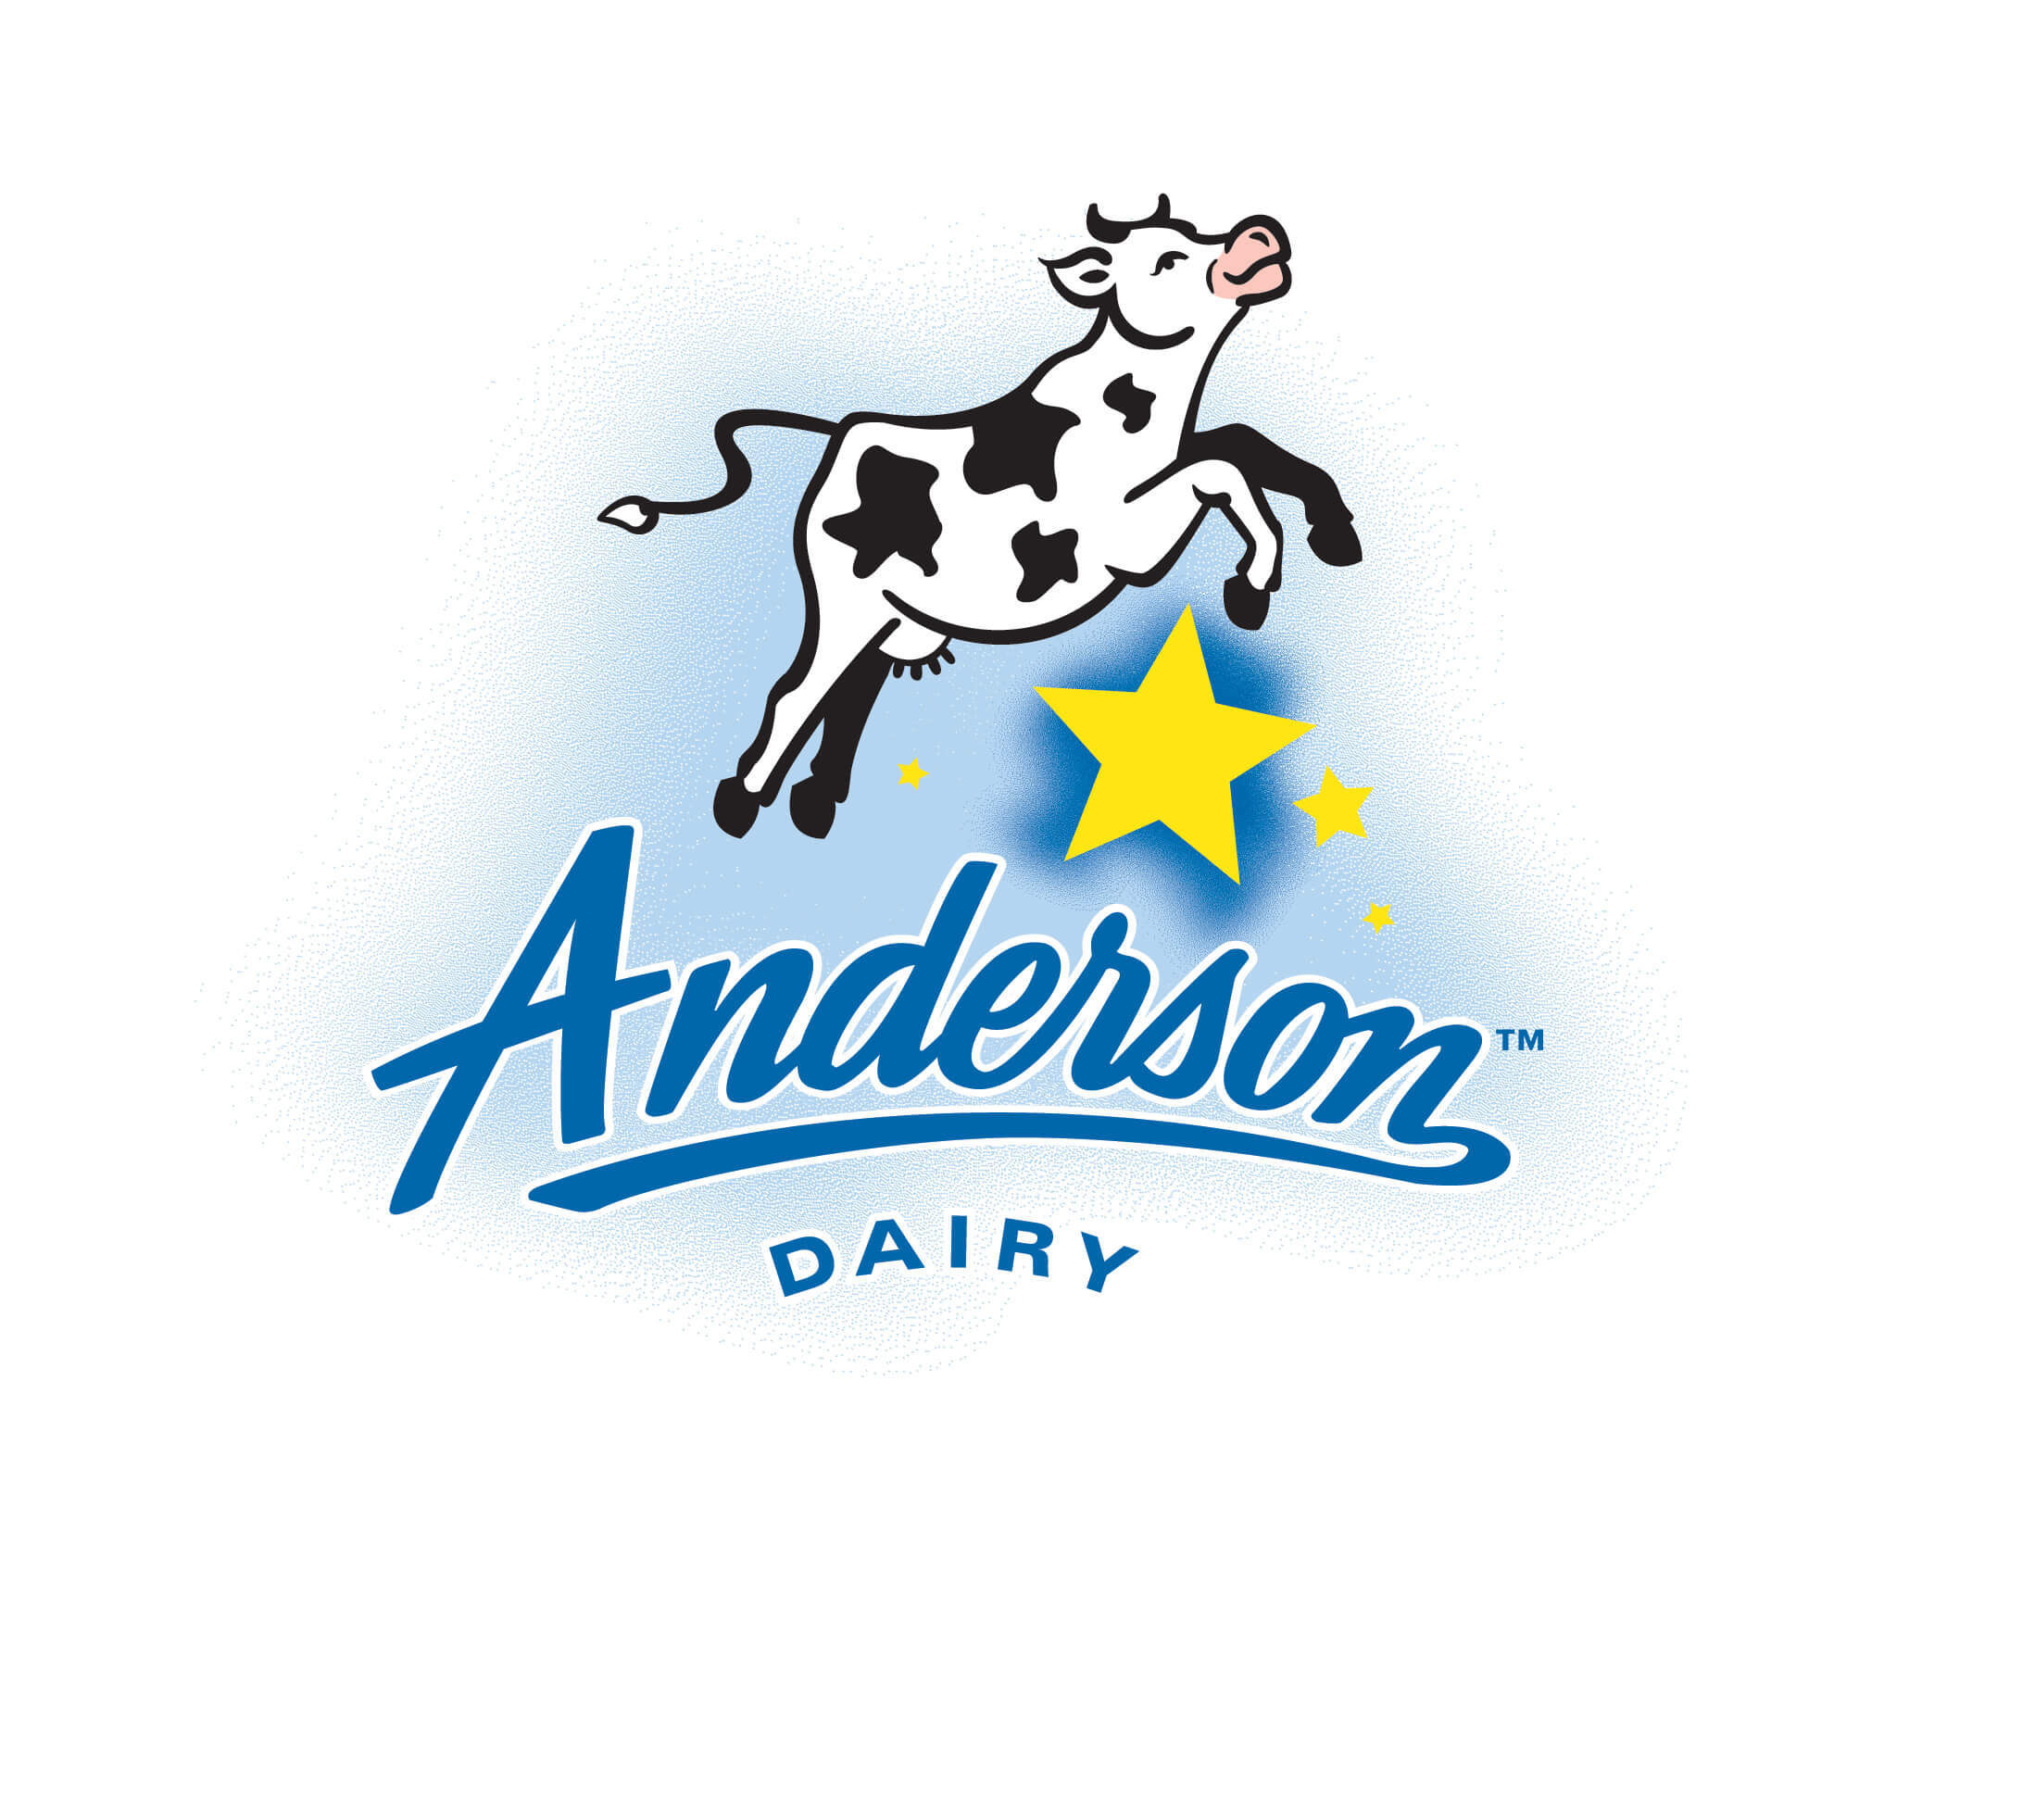 Anderson Dairy